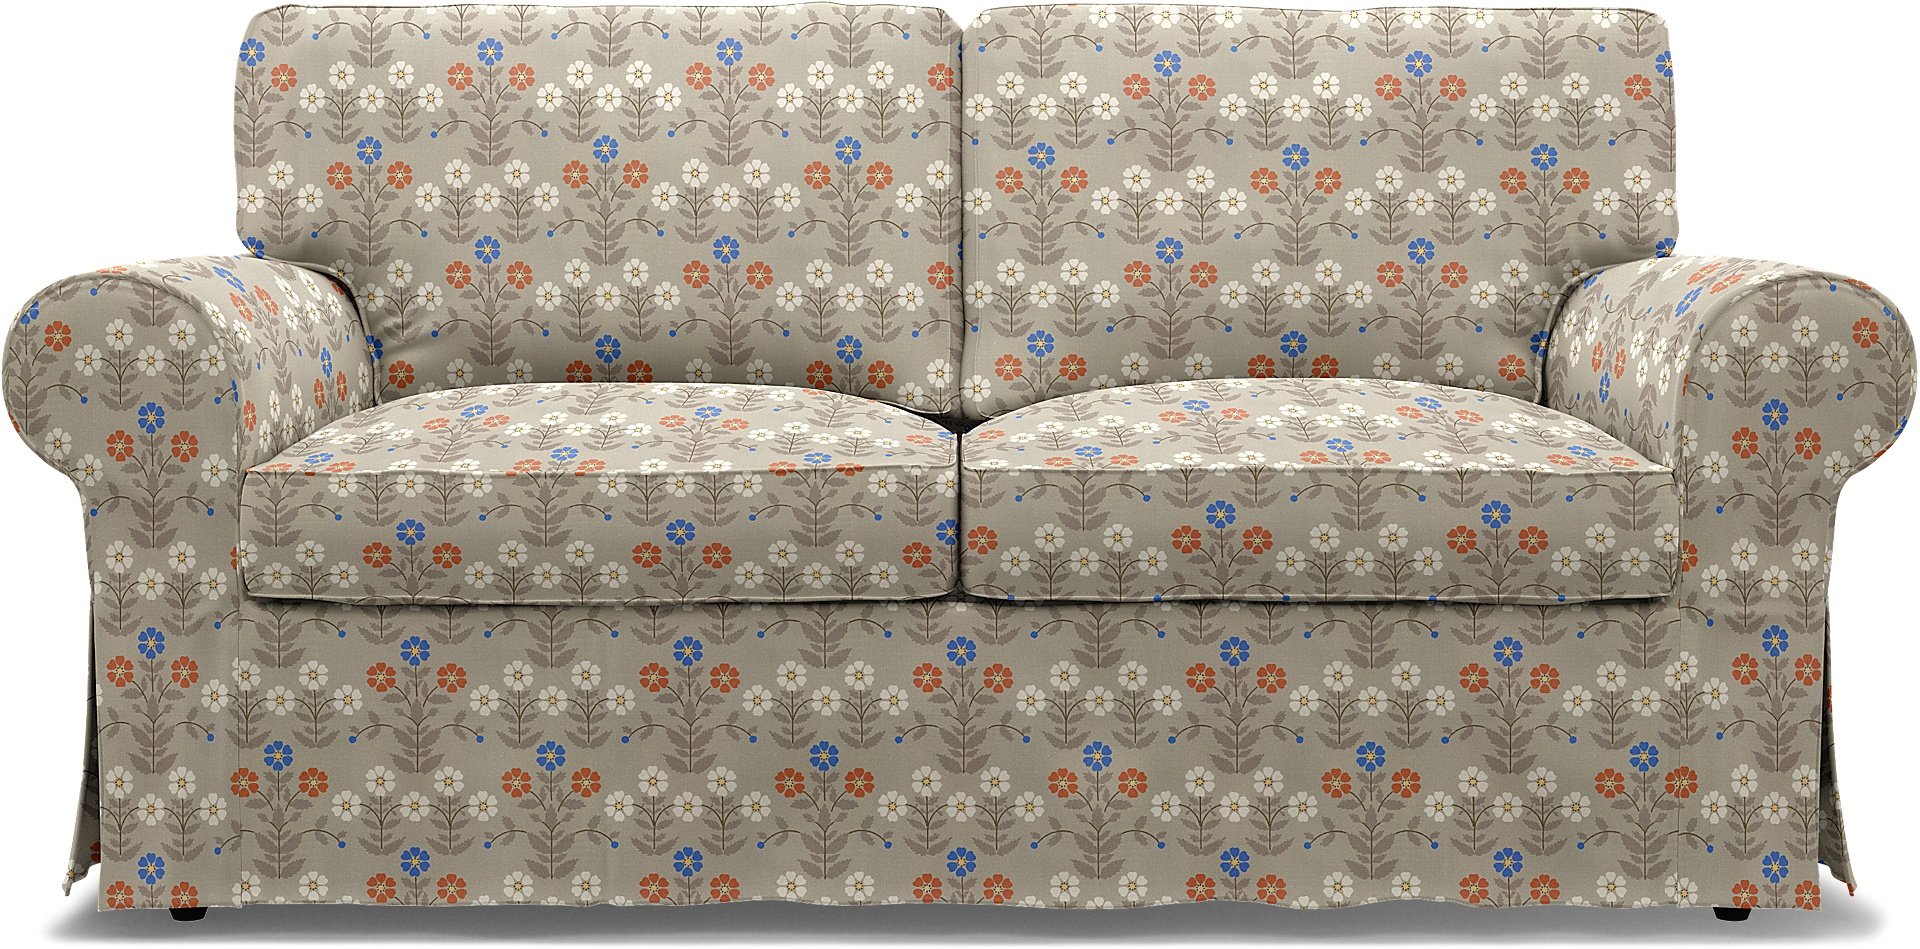 IKEA - Ektorp 2 Seater Sofa Bed Cover, Sippor Blue/Orange, BEMZ x BORASTAPETER COLLECTION - Bemz